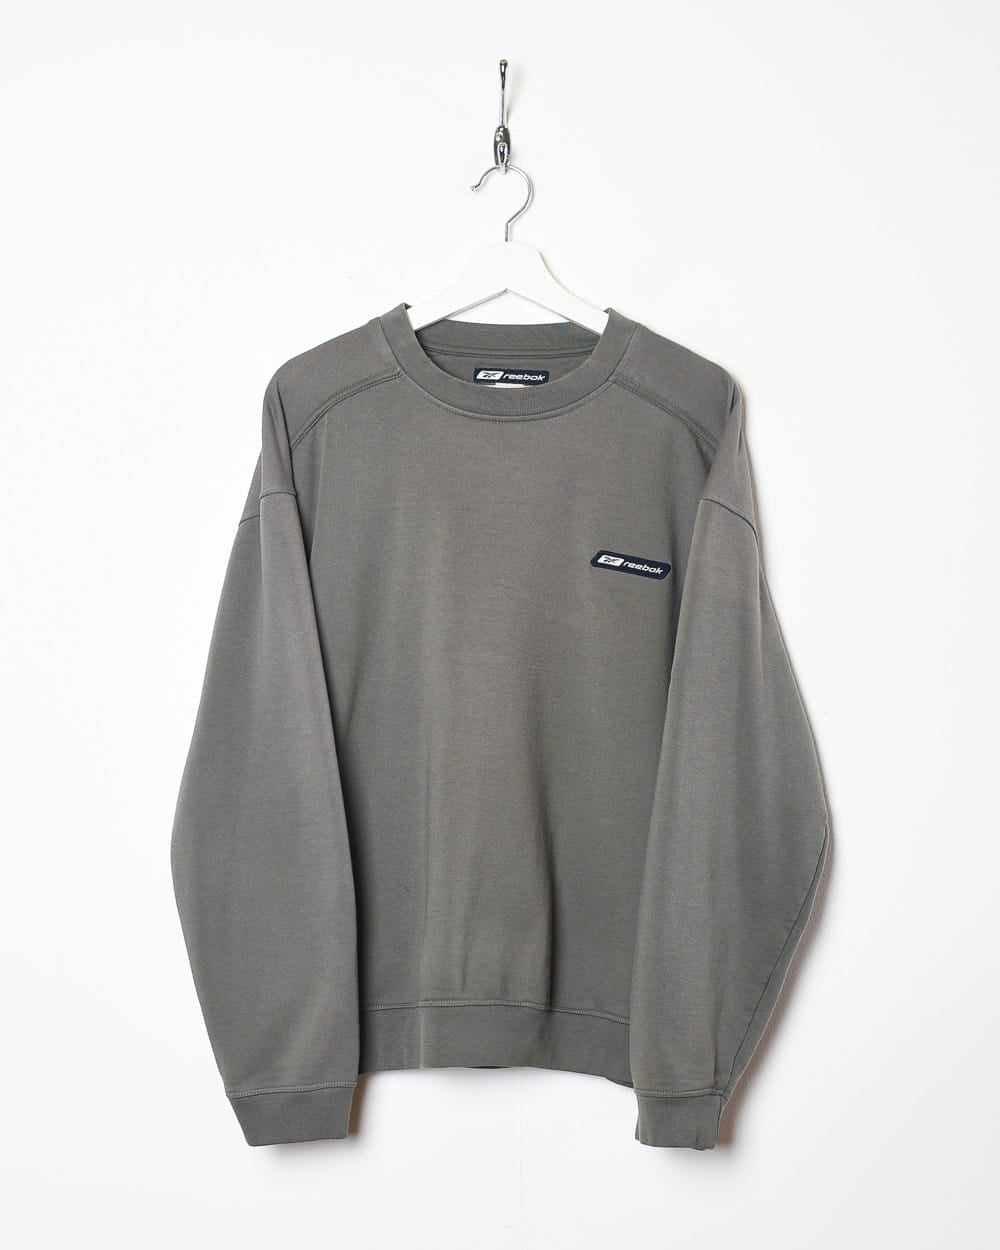 Khaki Reebok Sweatshirt - Medium